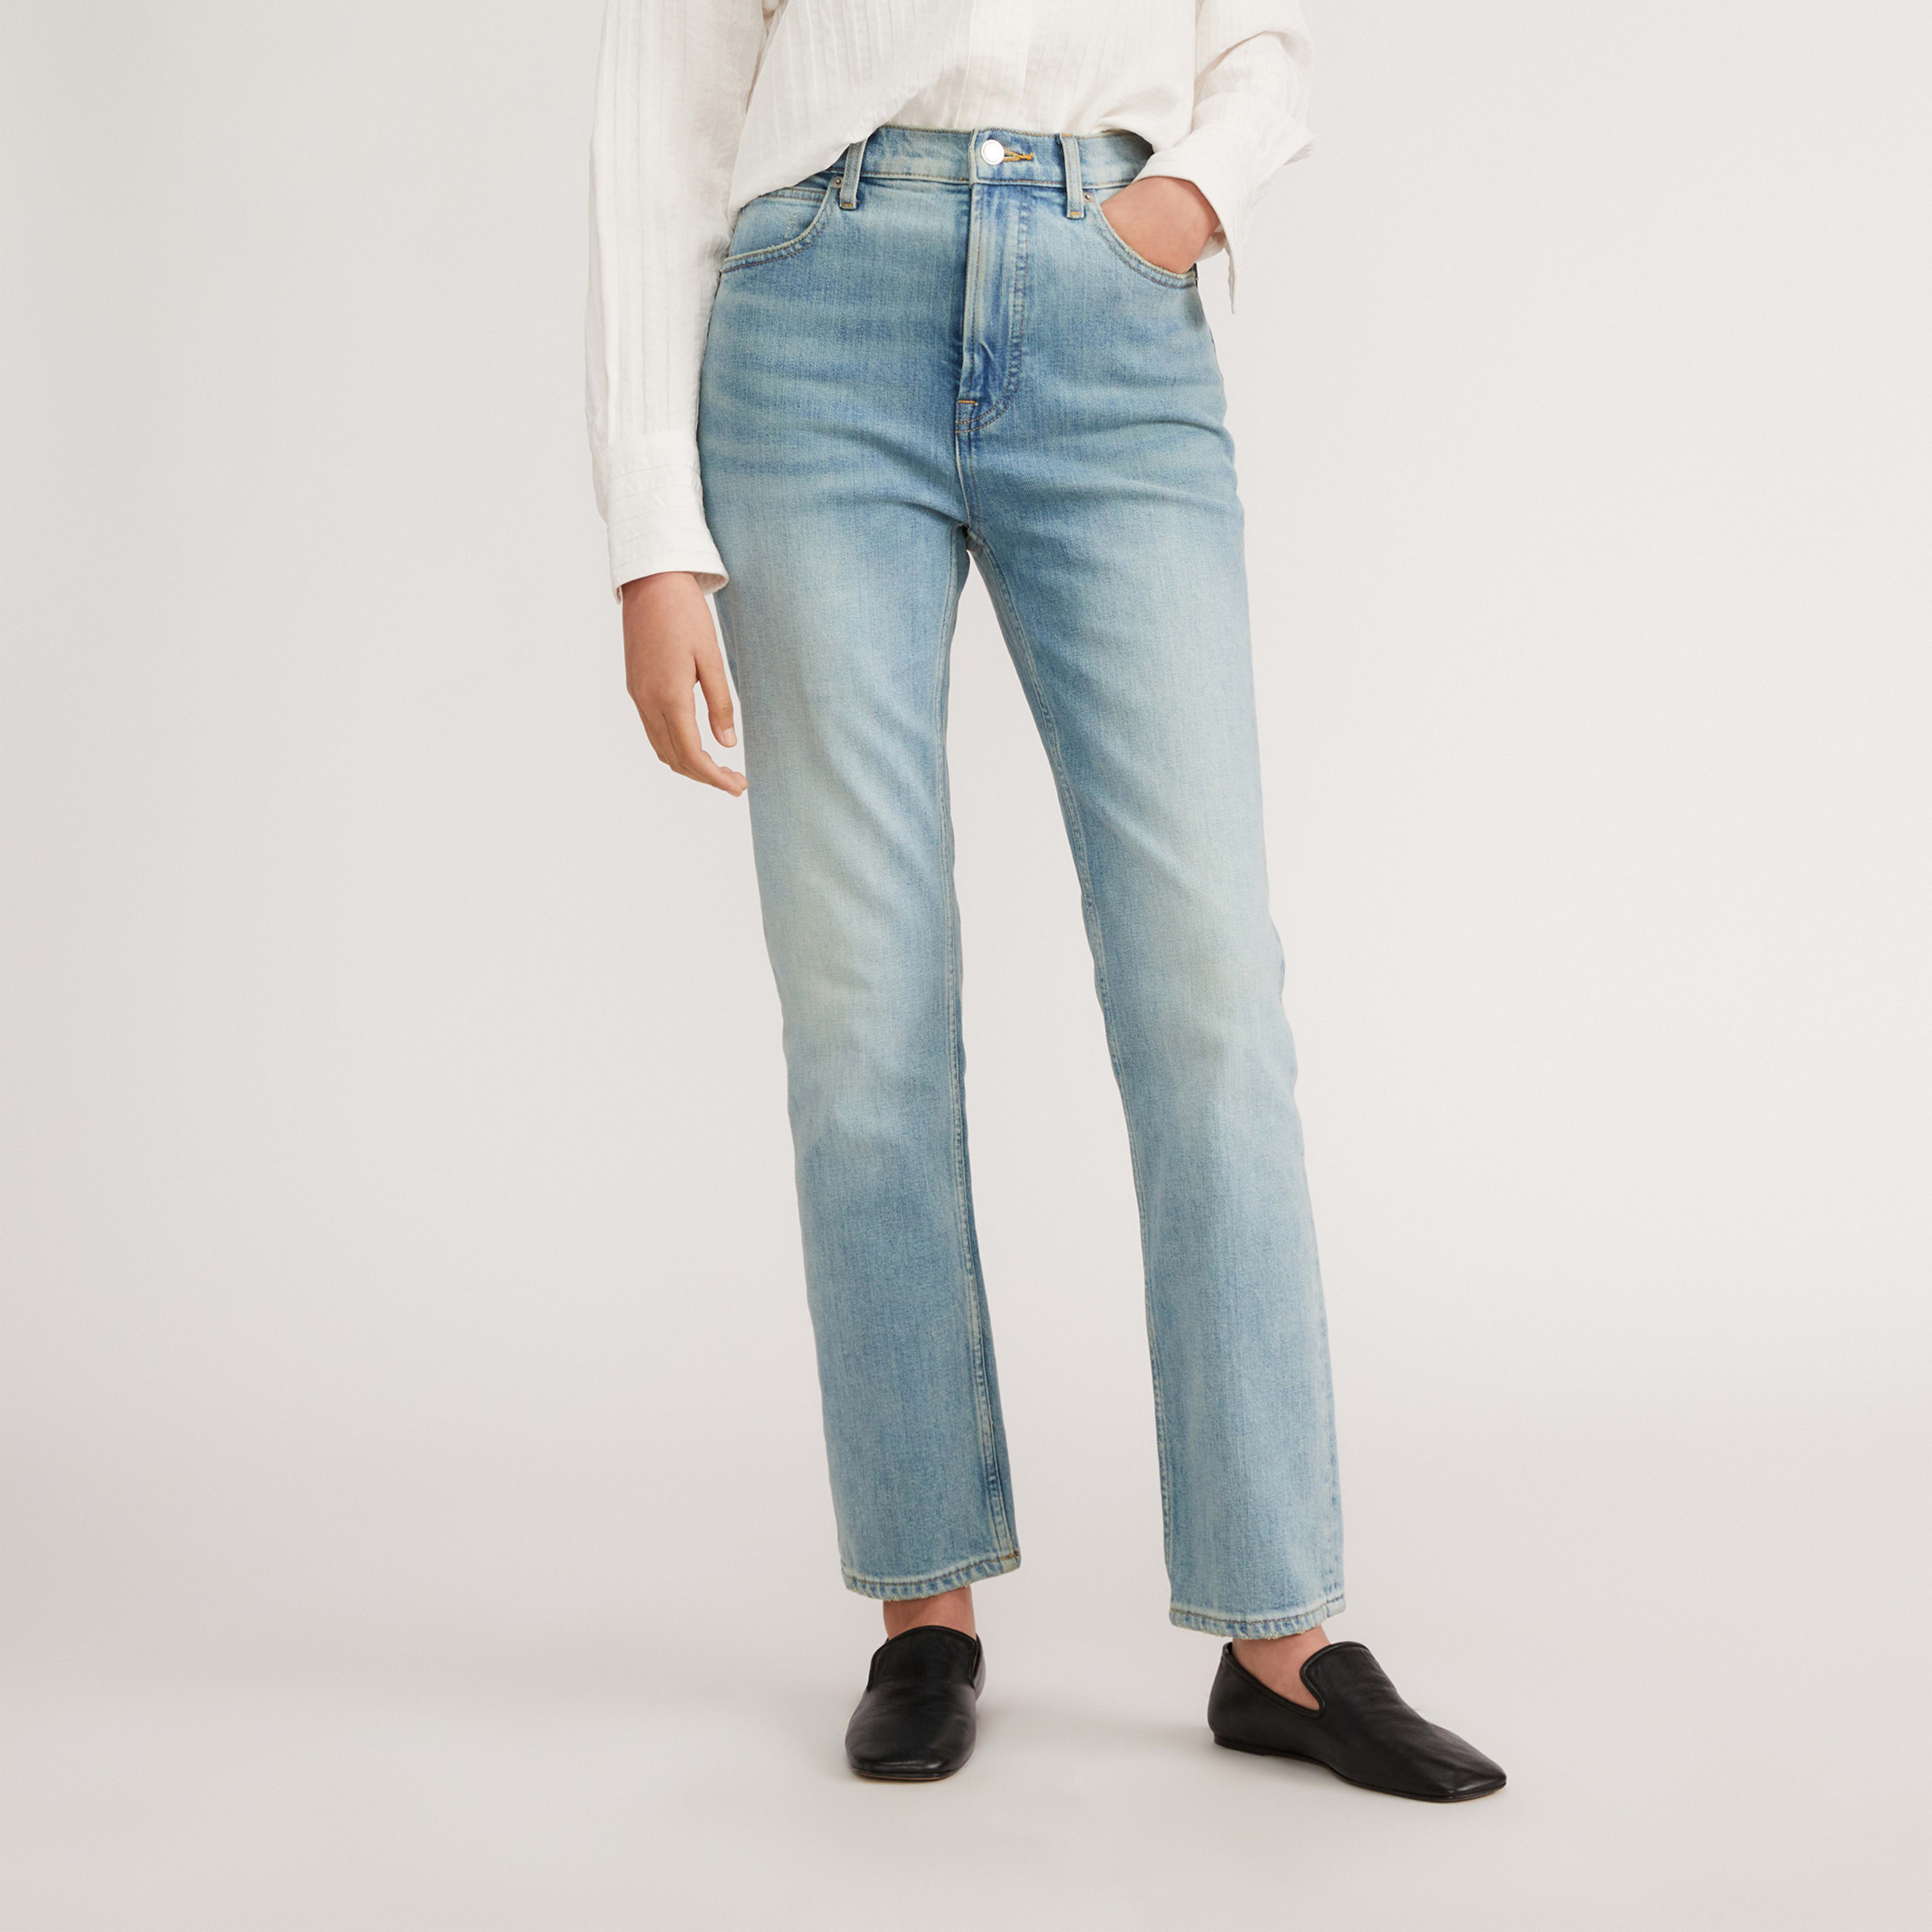 women's way-high slim jean by everlane in vintage light, size 23